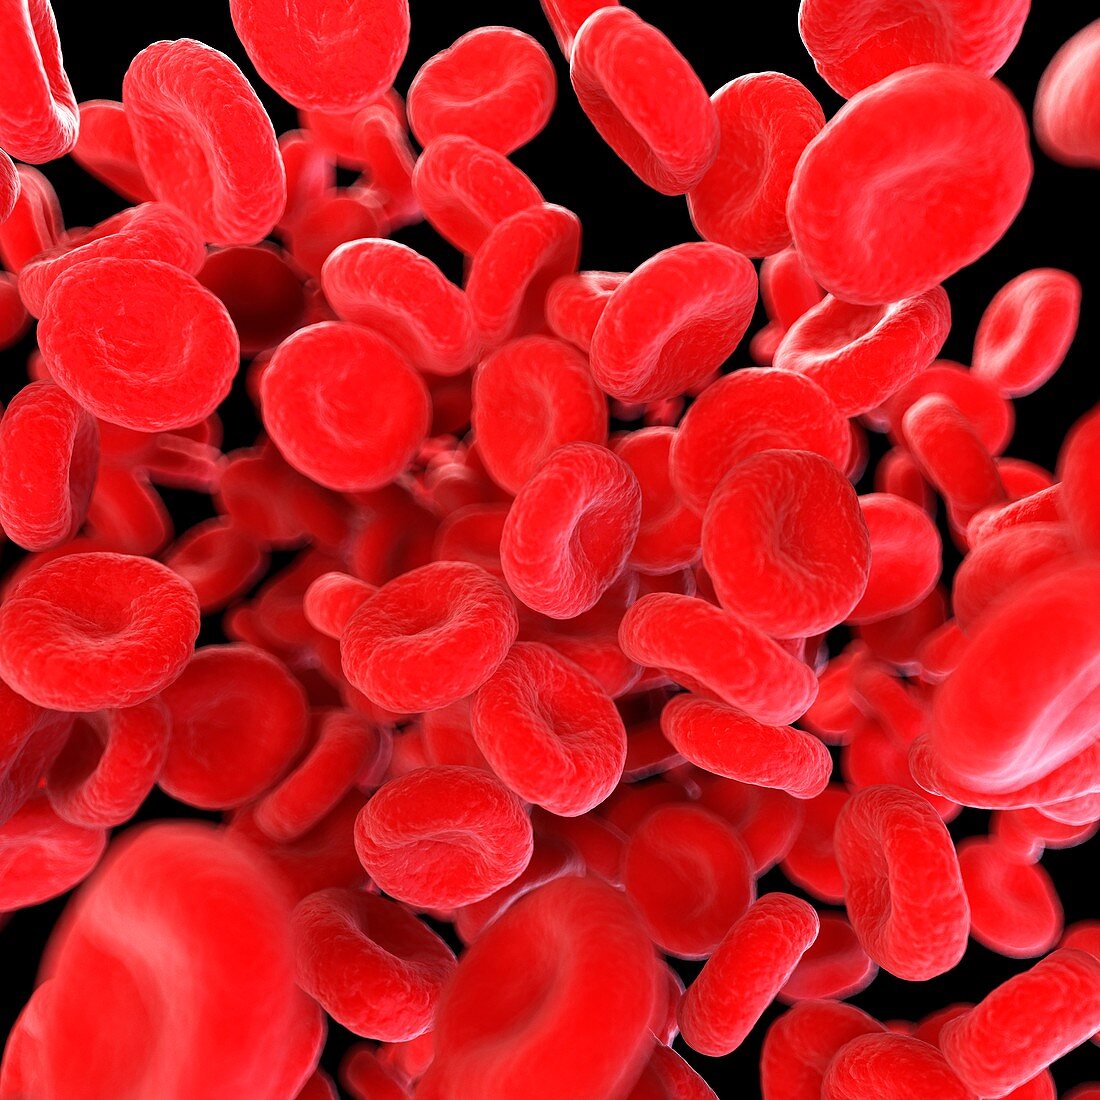 Illustration of human blood cells